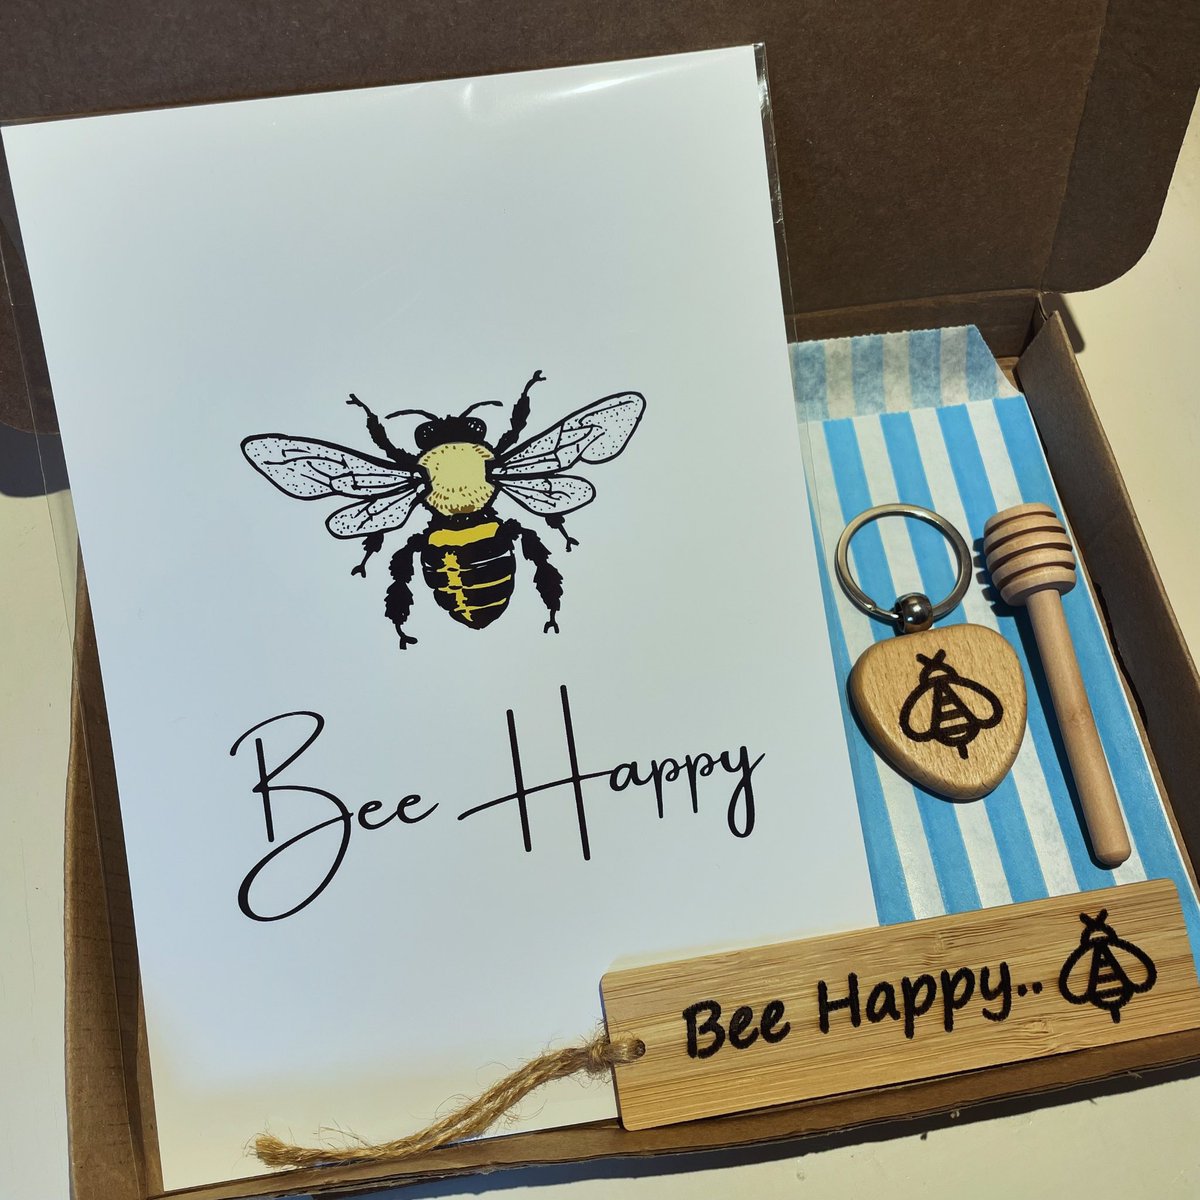 Bee Happy Letterbox Gift Set 🐝
• £10 plus P&P 📮
littlenscrafts.etsy.com
littlens-crafts.sumupstore.com
#EarlyBiz #EtsyUK #EcoFriendly #TheCraftersUK #UKMakers #CraftBizParty